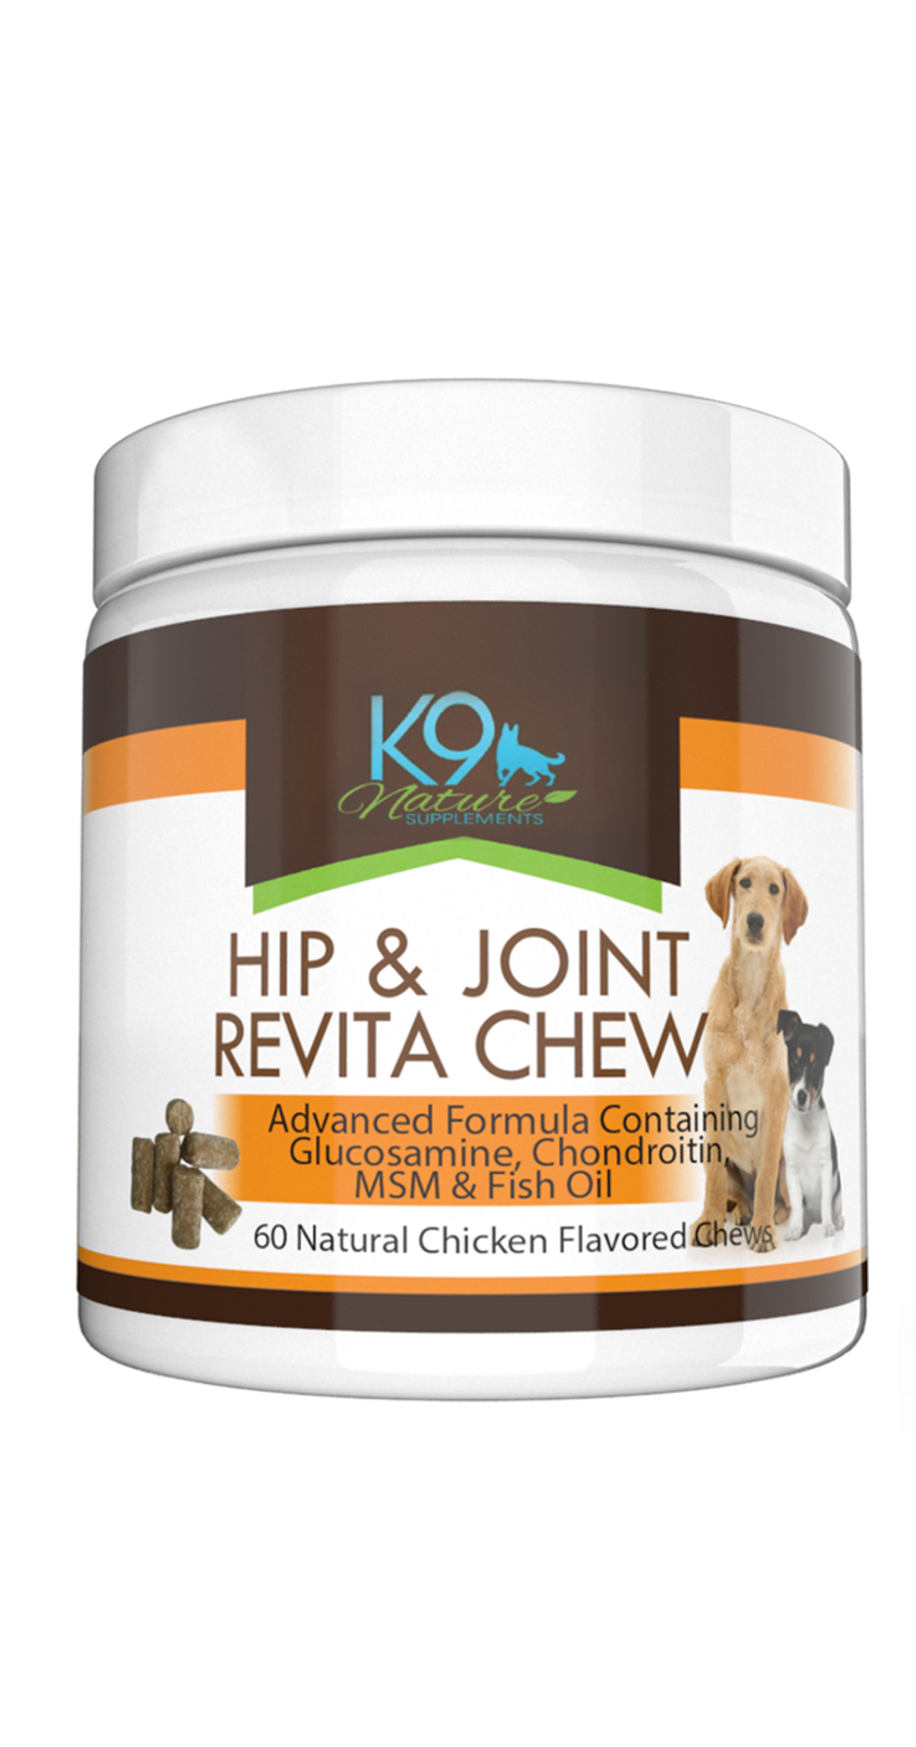 Hip & Joint Revita Chew